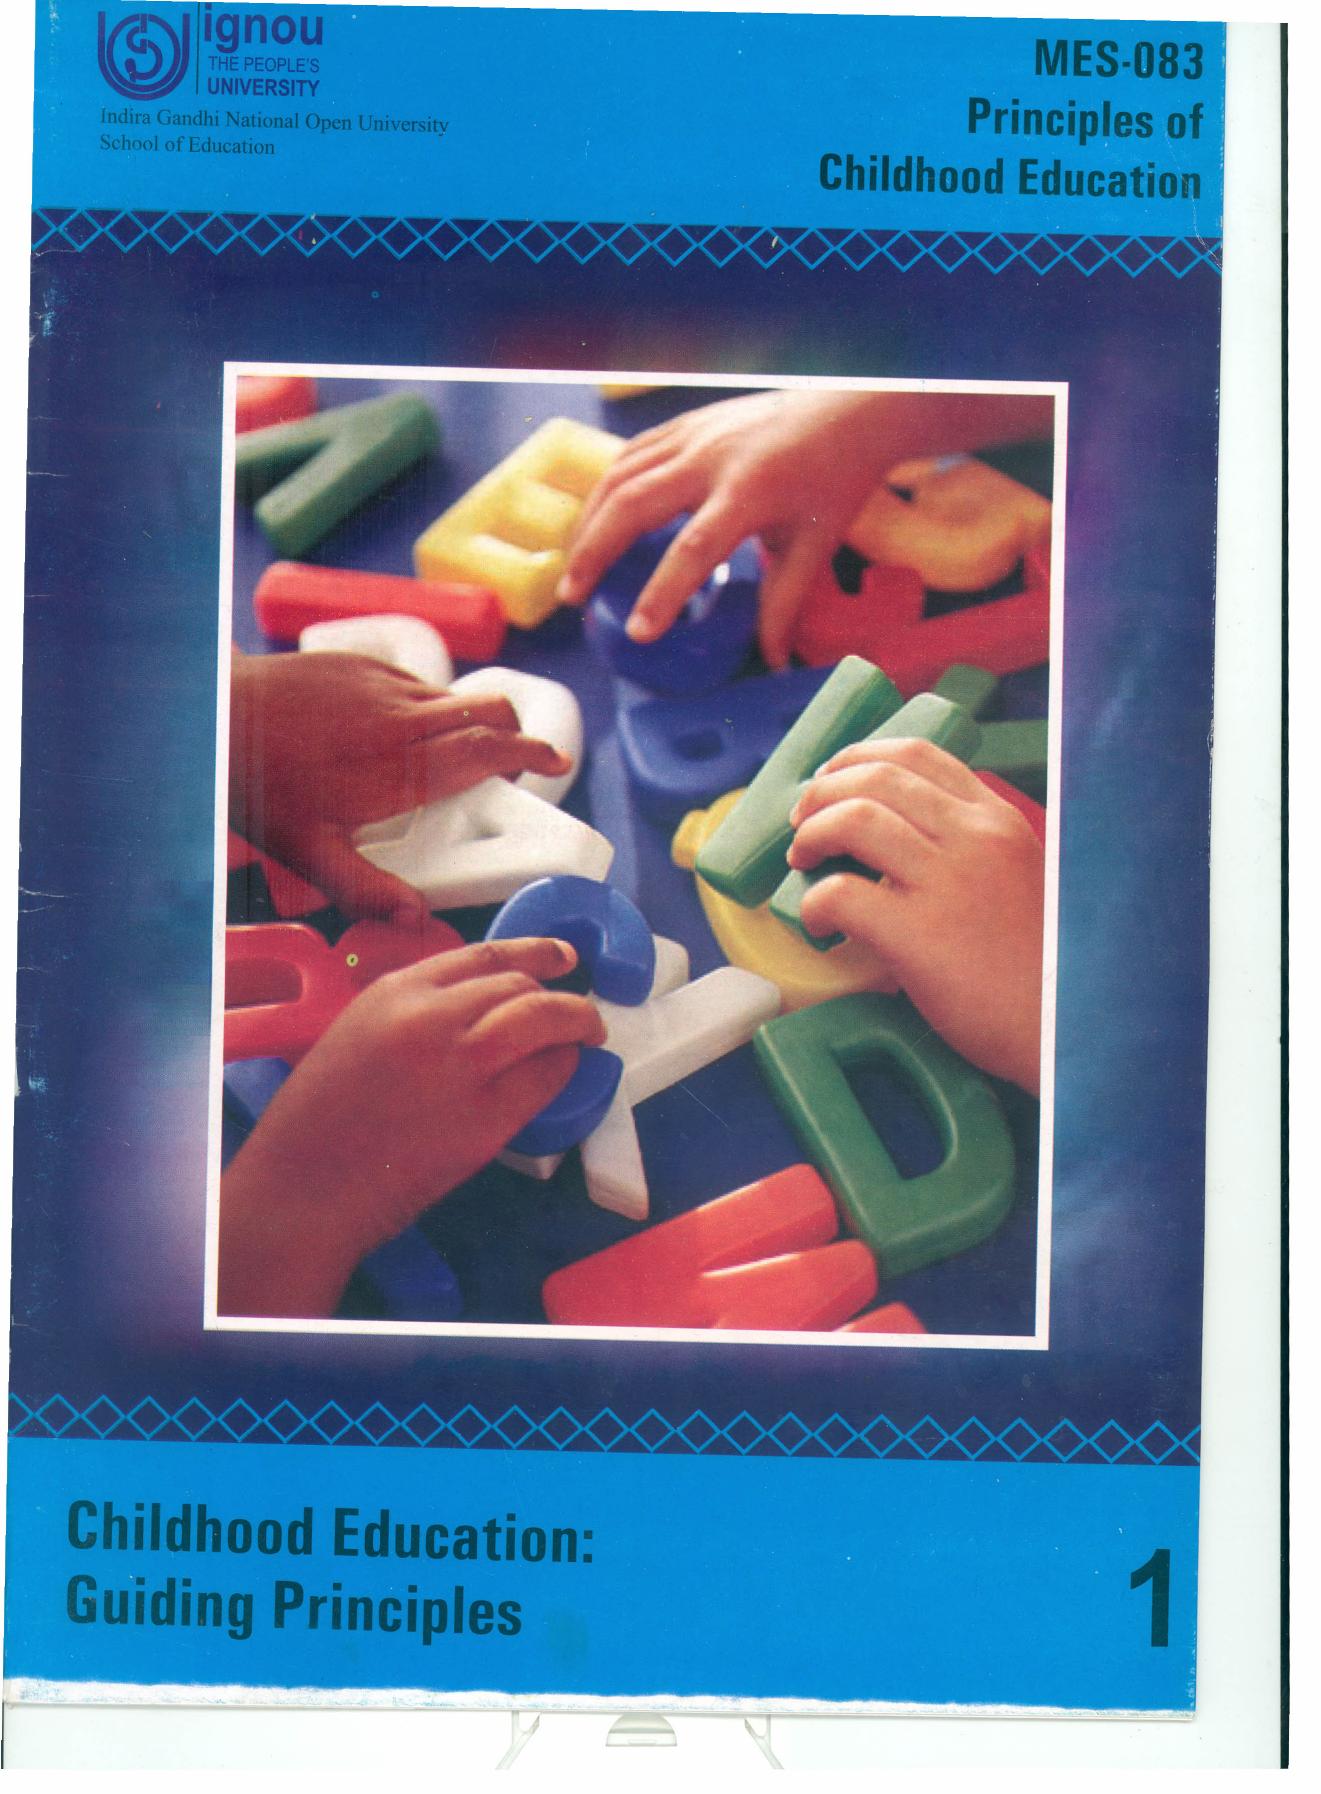 MES-083 Principles of Childhood Education